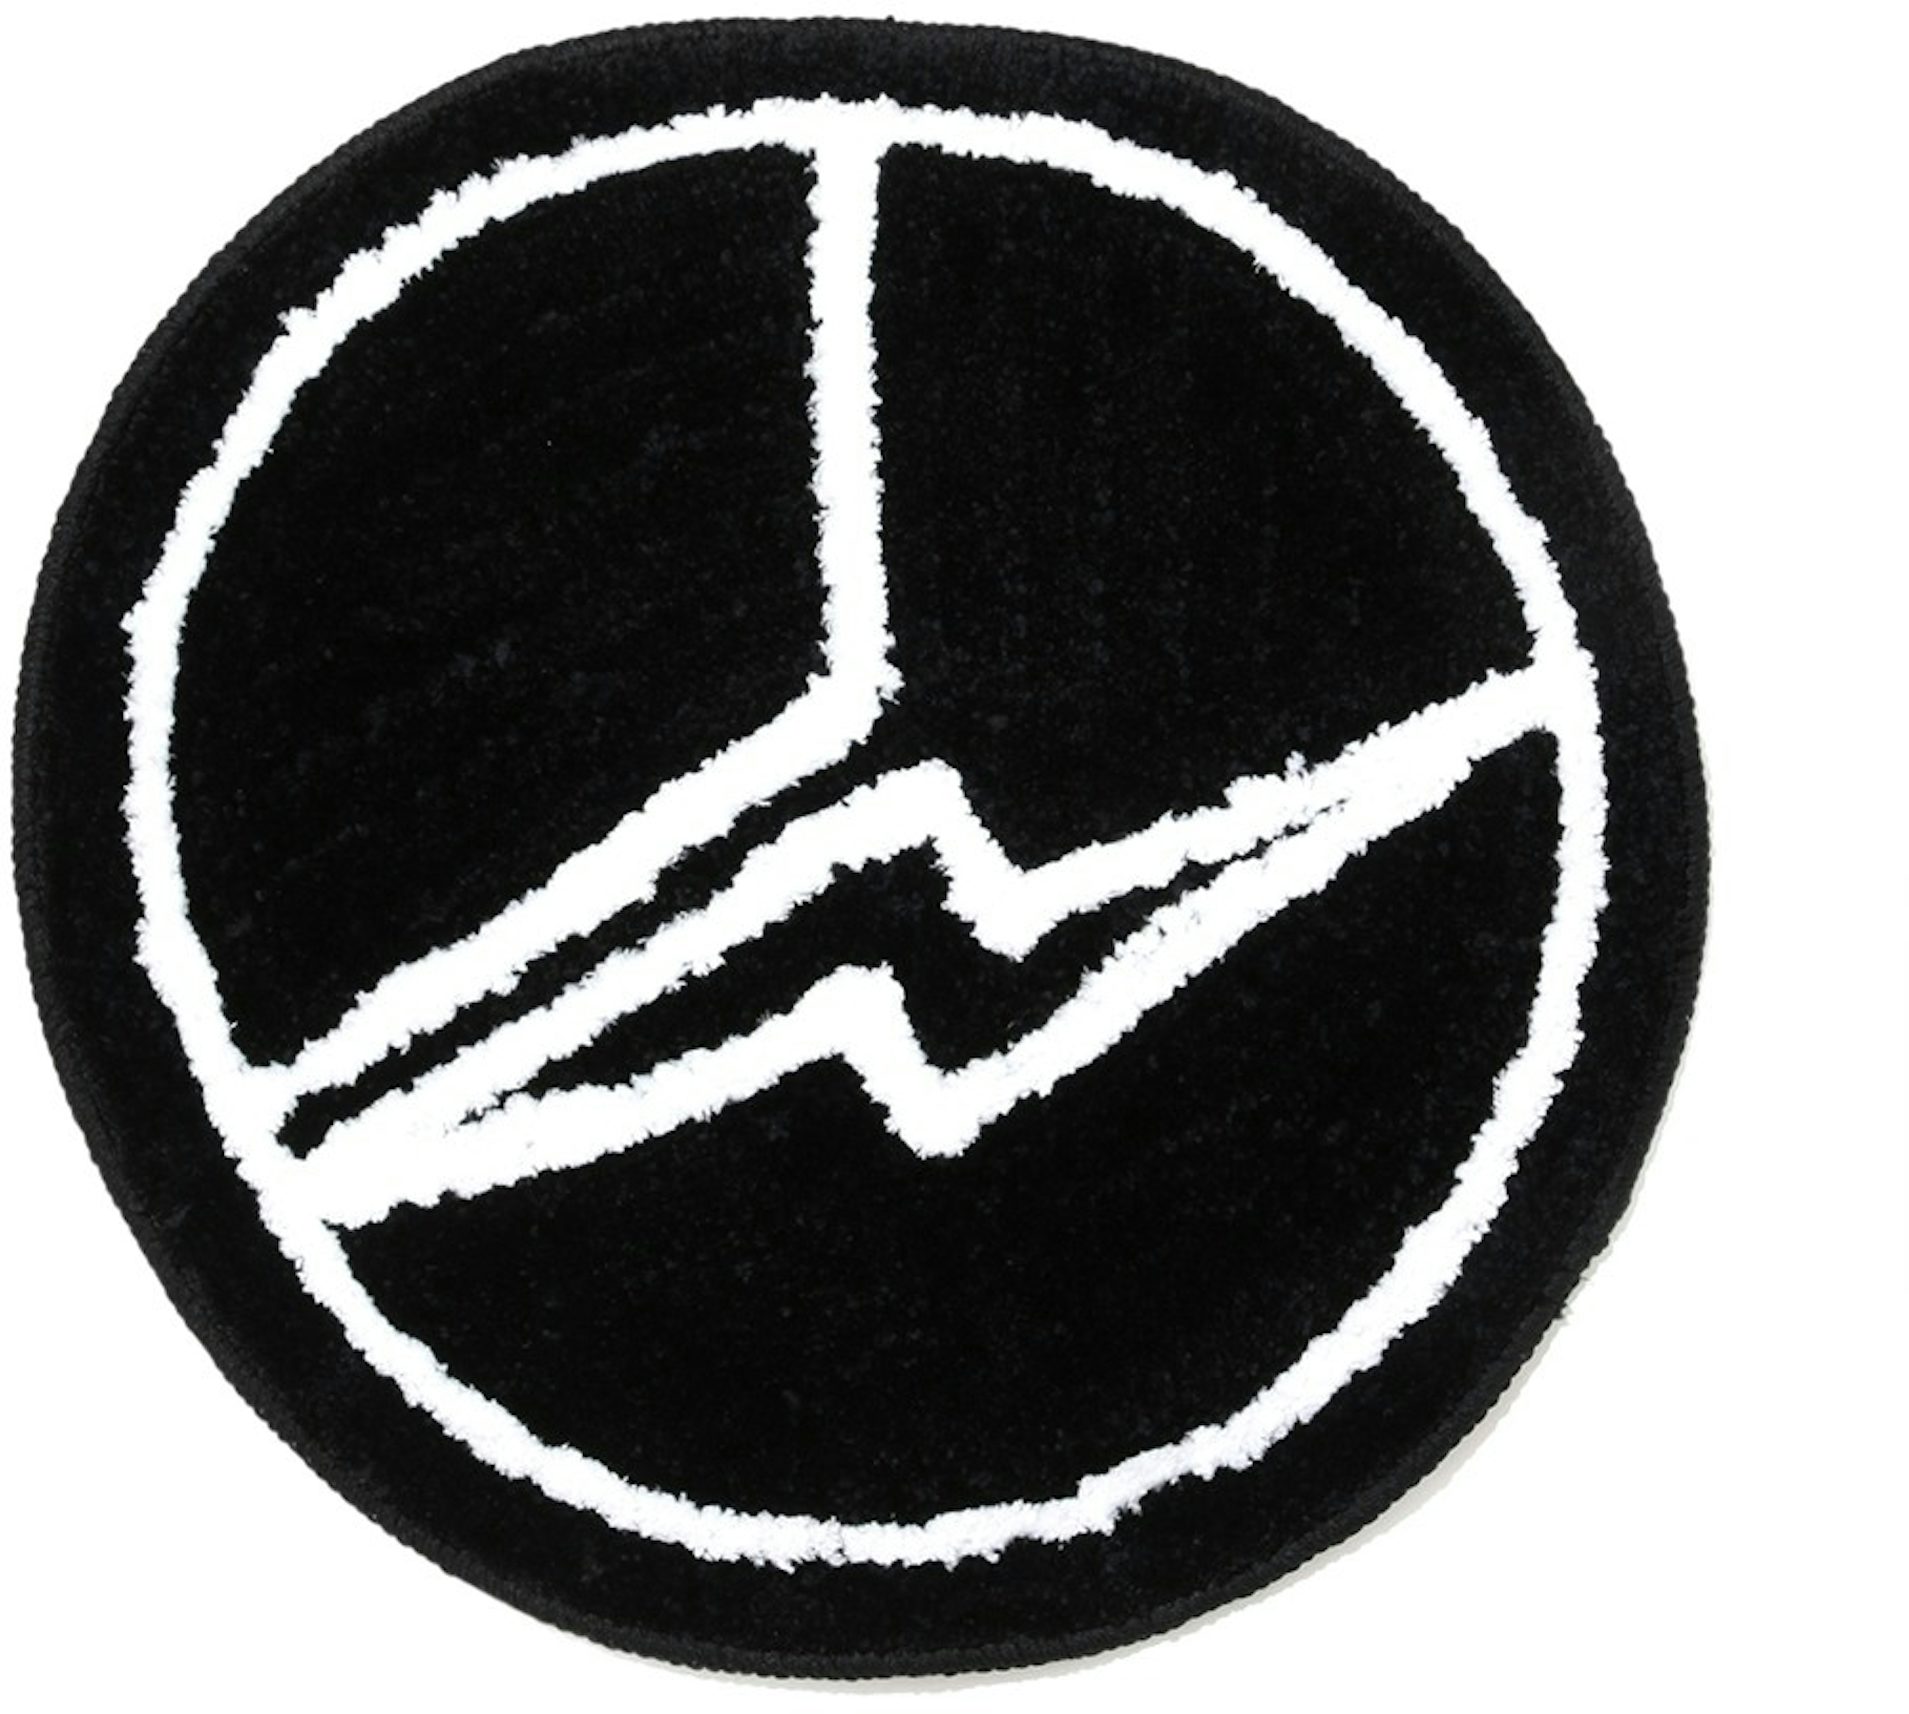 Fragment Logo 